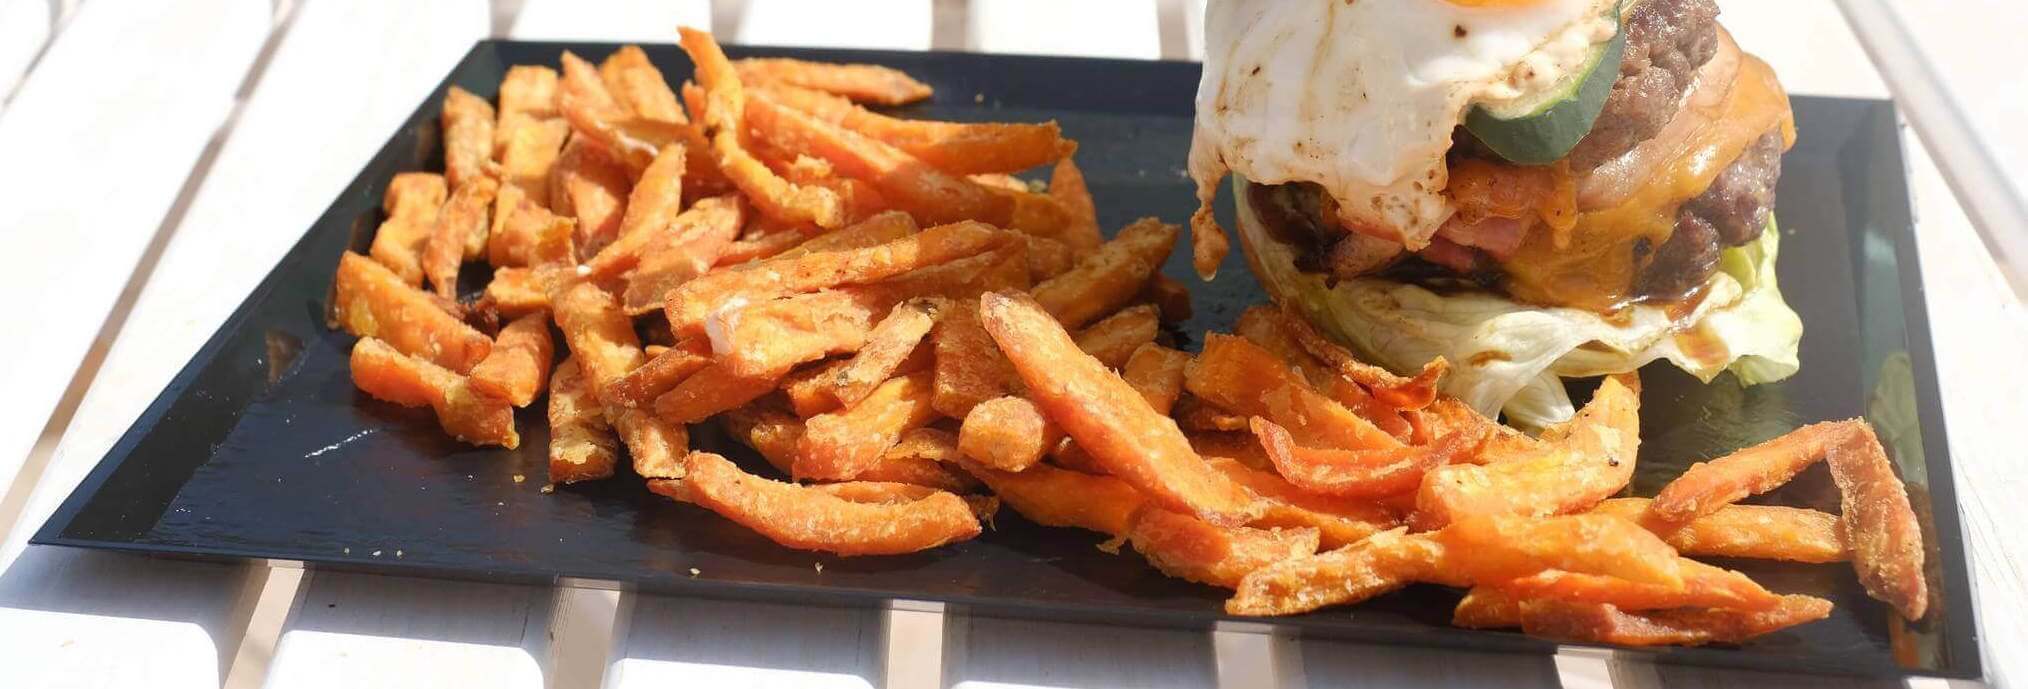 ronis-sweet-potato-fries-homemade-sauce-dip-burger